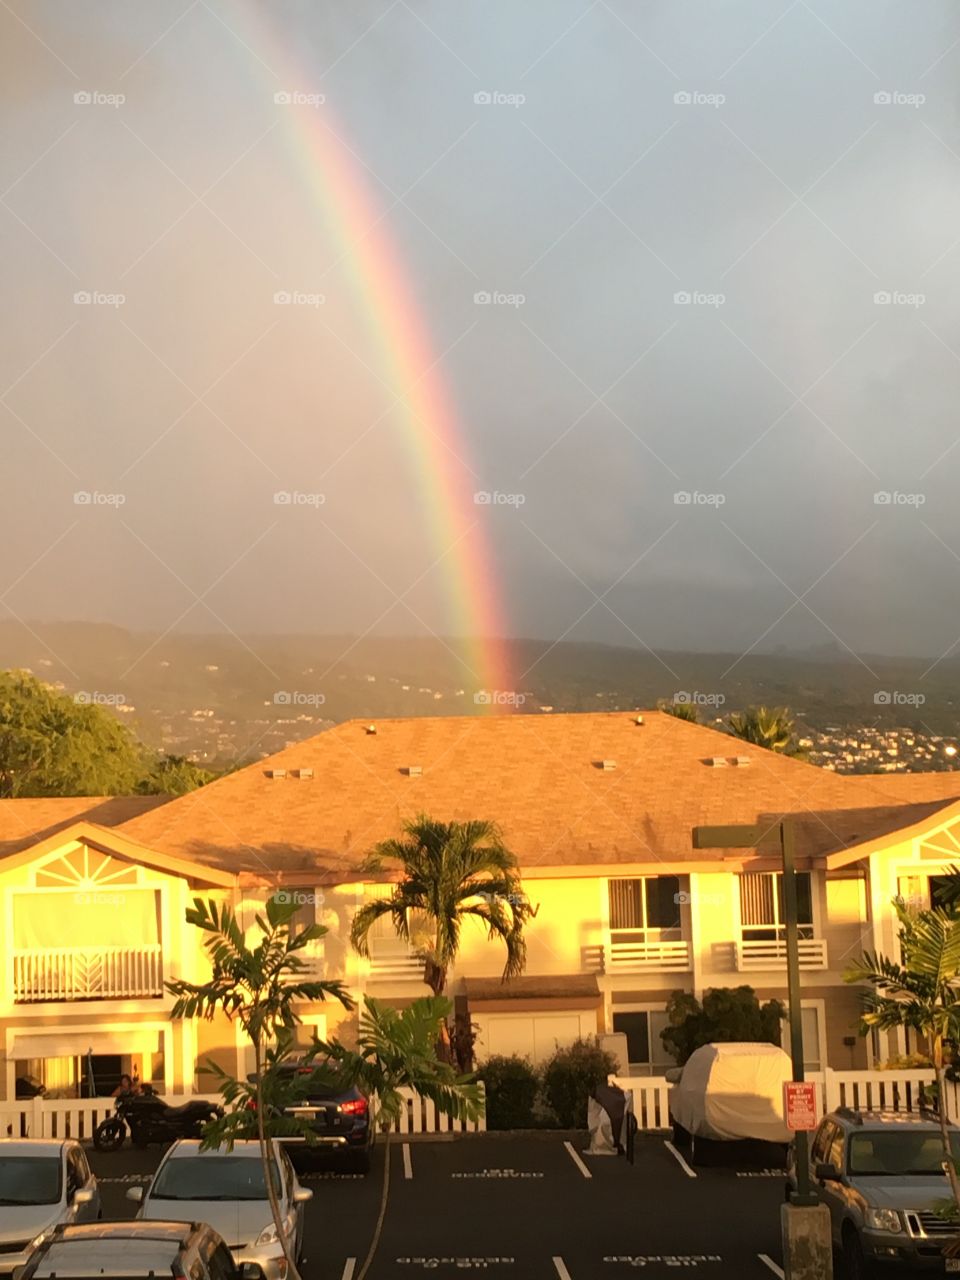 The treasure at the end of the rainbow - a townhouse along Alii Drive in Kailua Kona, HI.